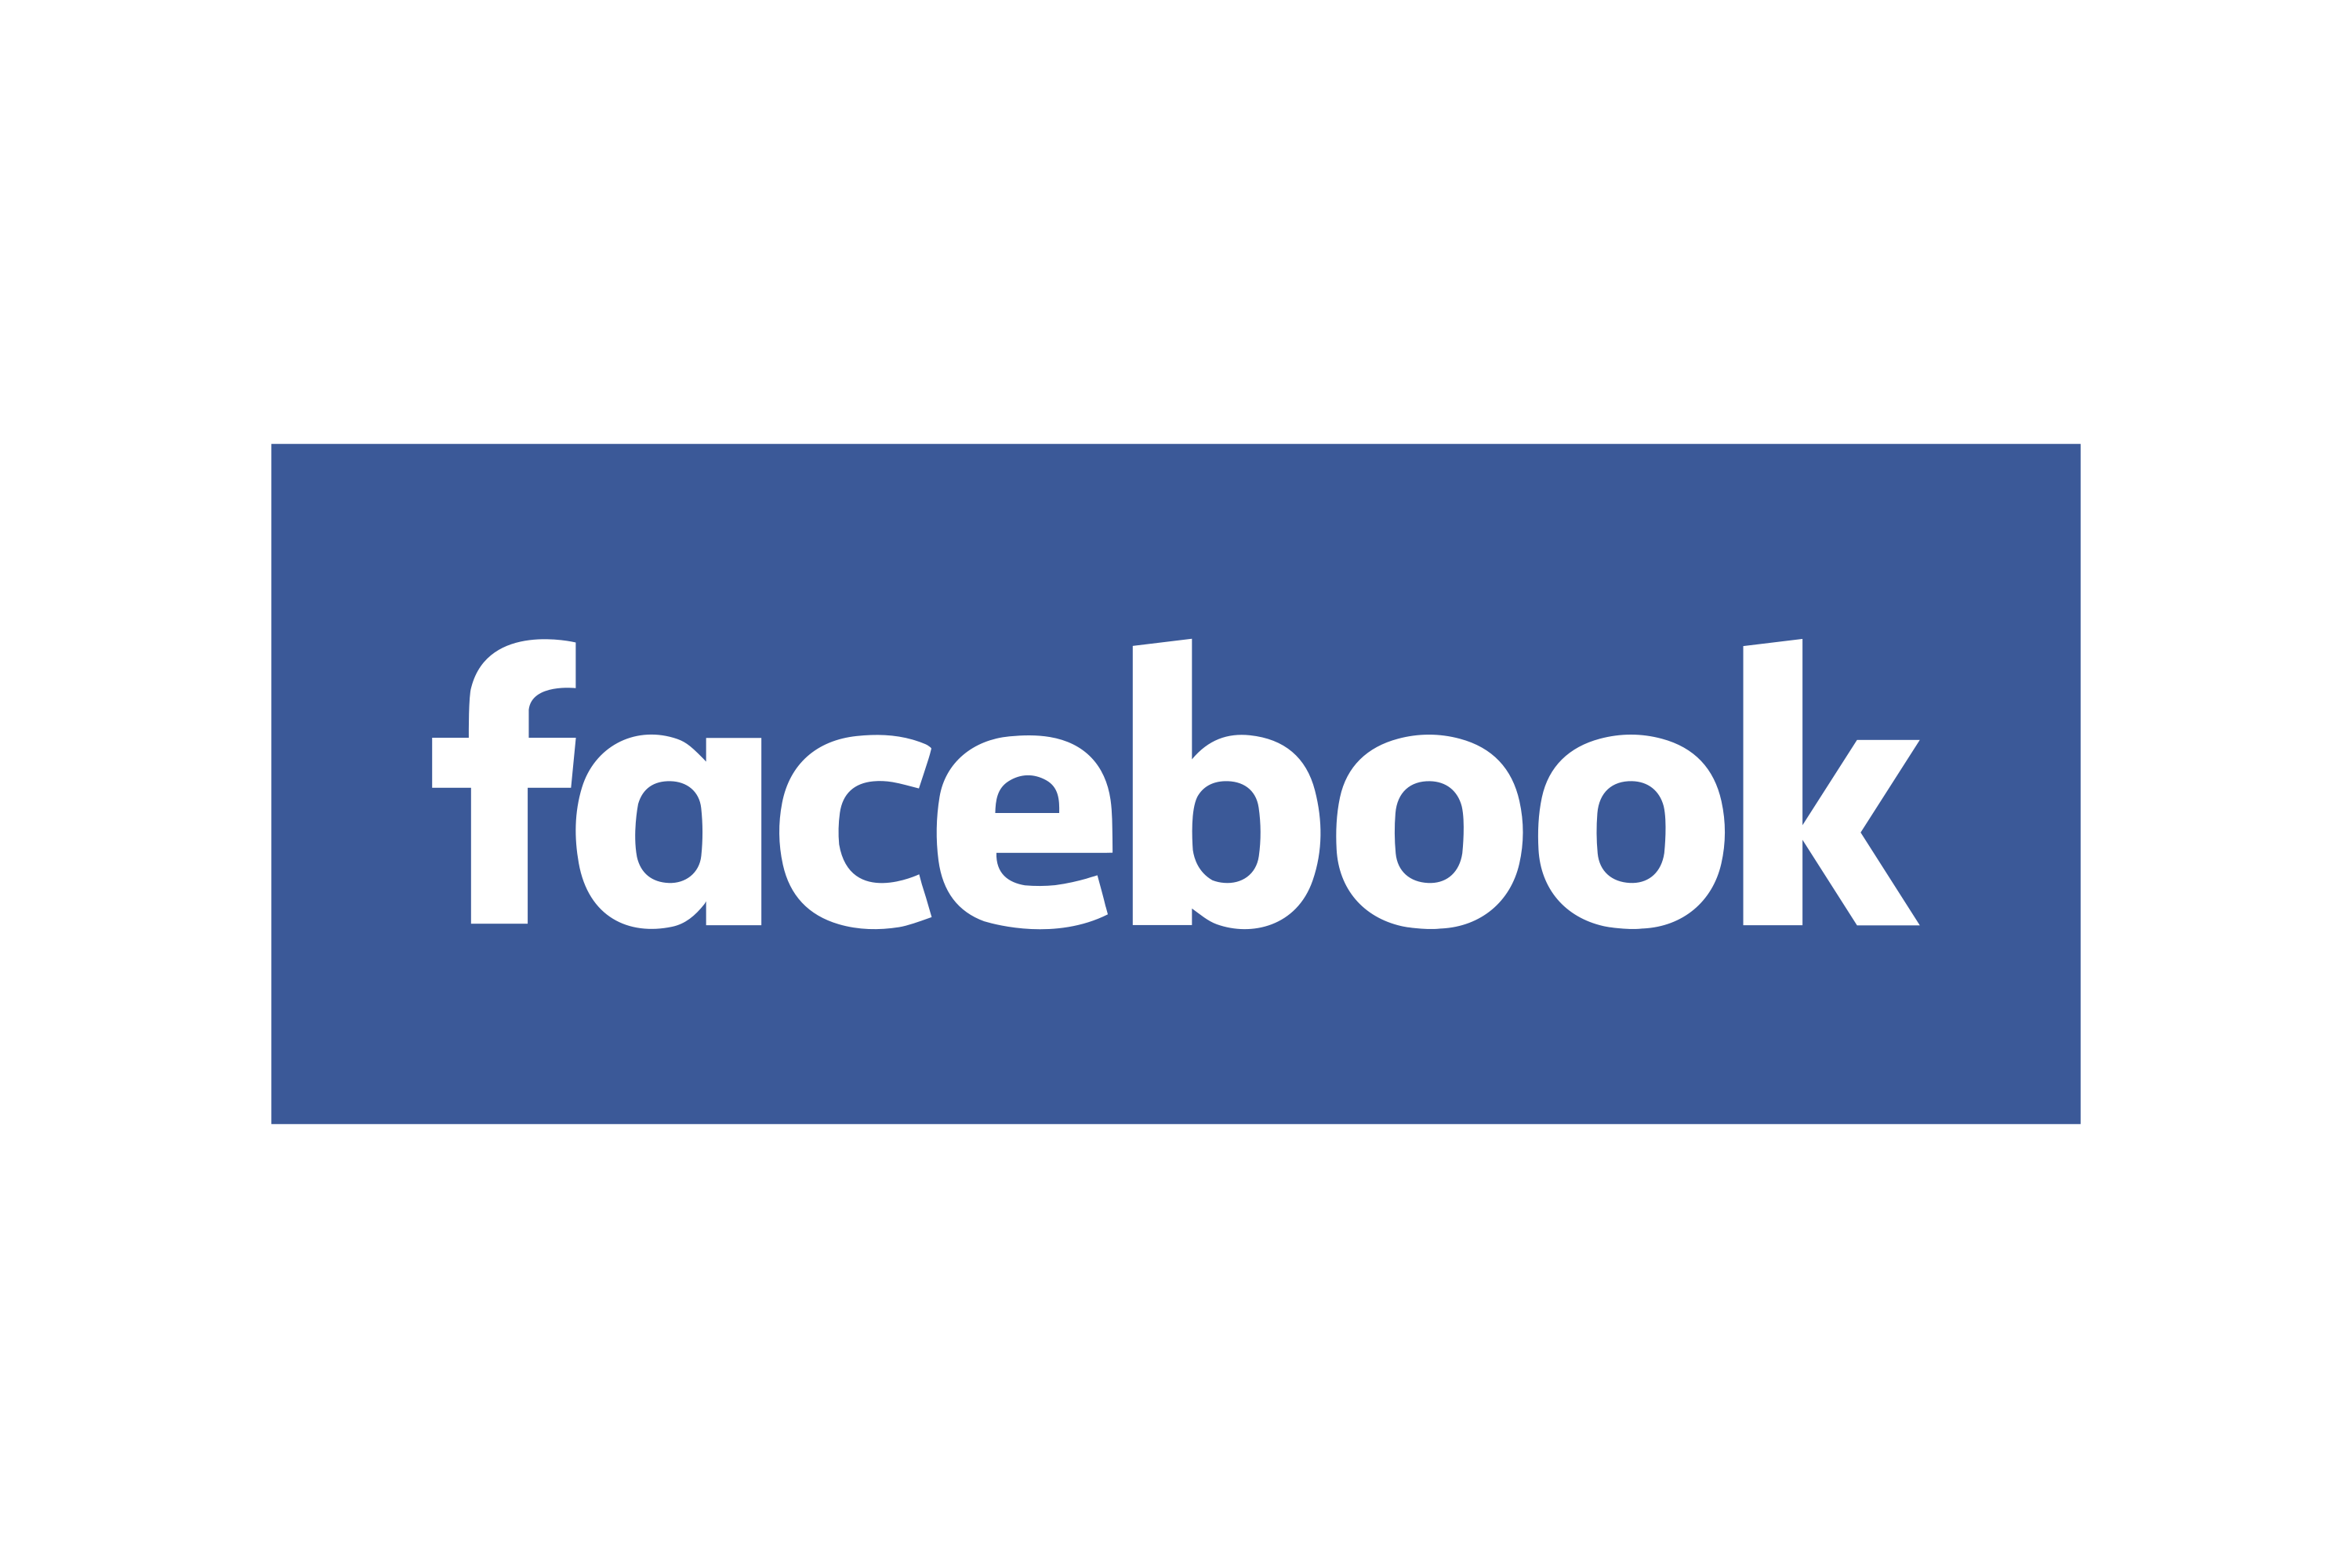 Https facebook com story php. Фейсбук. Надпись Фейсбук. Кнопка Фейсбук. Facebook логотип без фона.